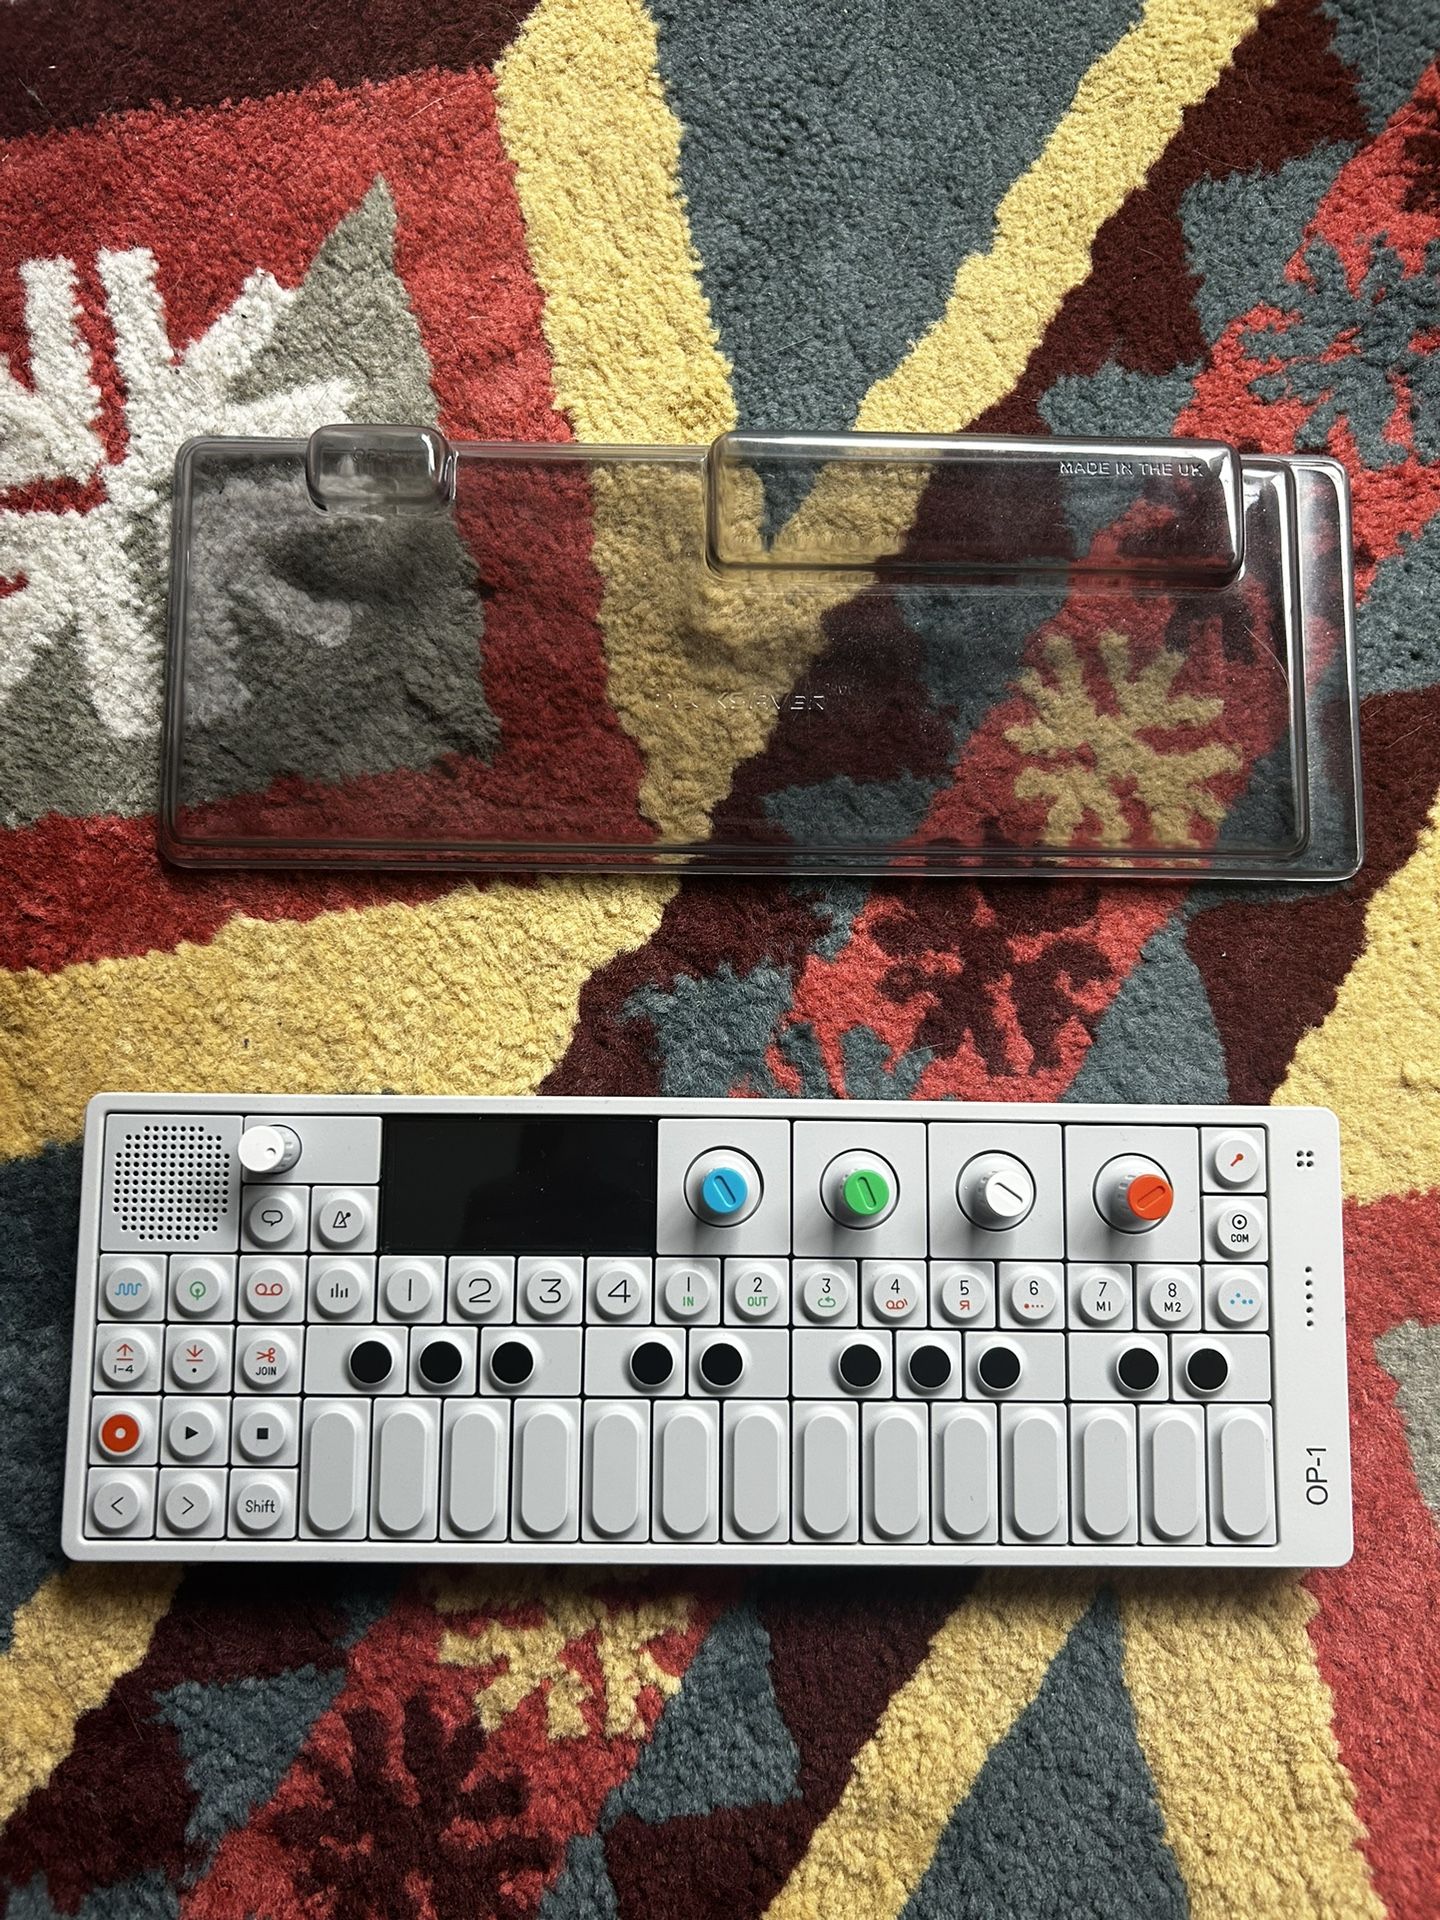 OP-1 Synthesizer (Teenage Engineering)